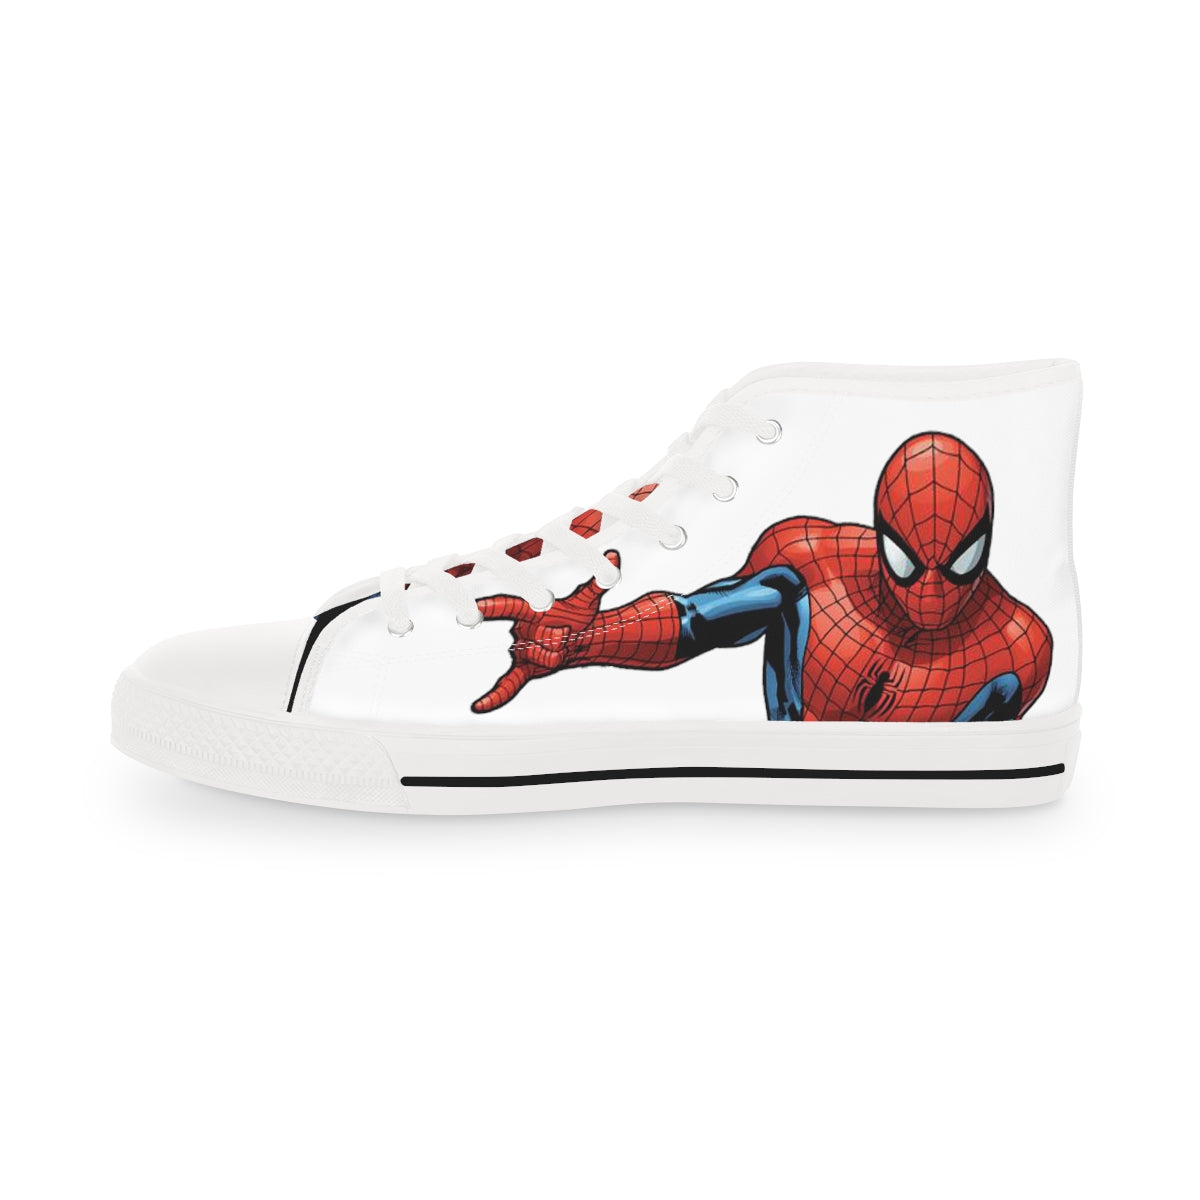 Men's High Top Sneakers, Spiderman Theme